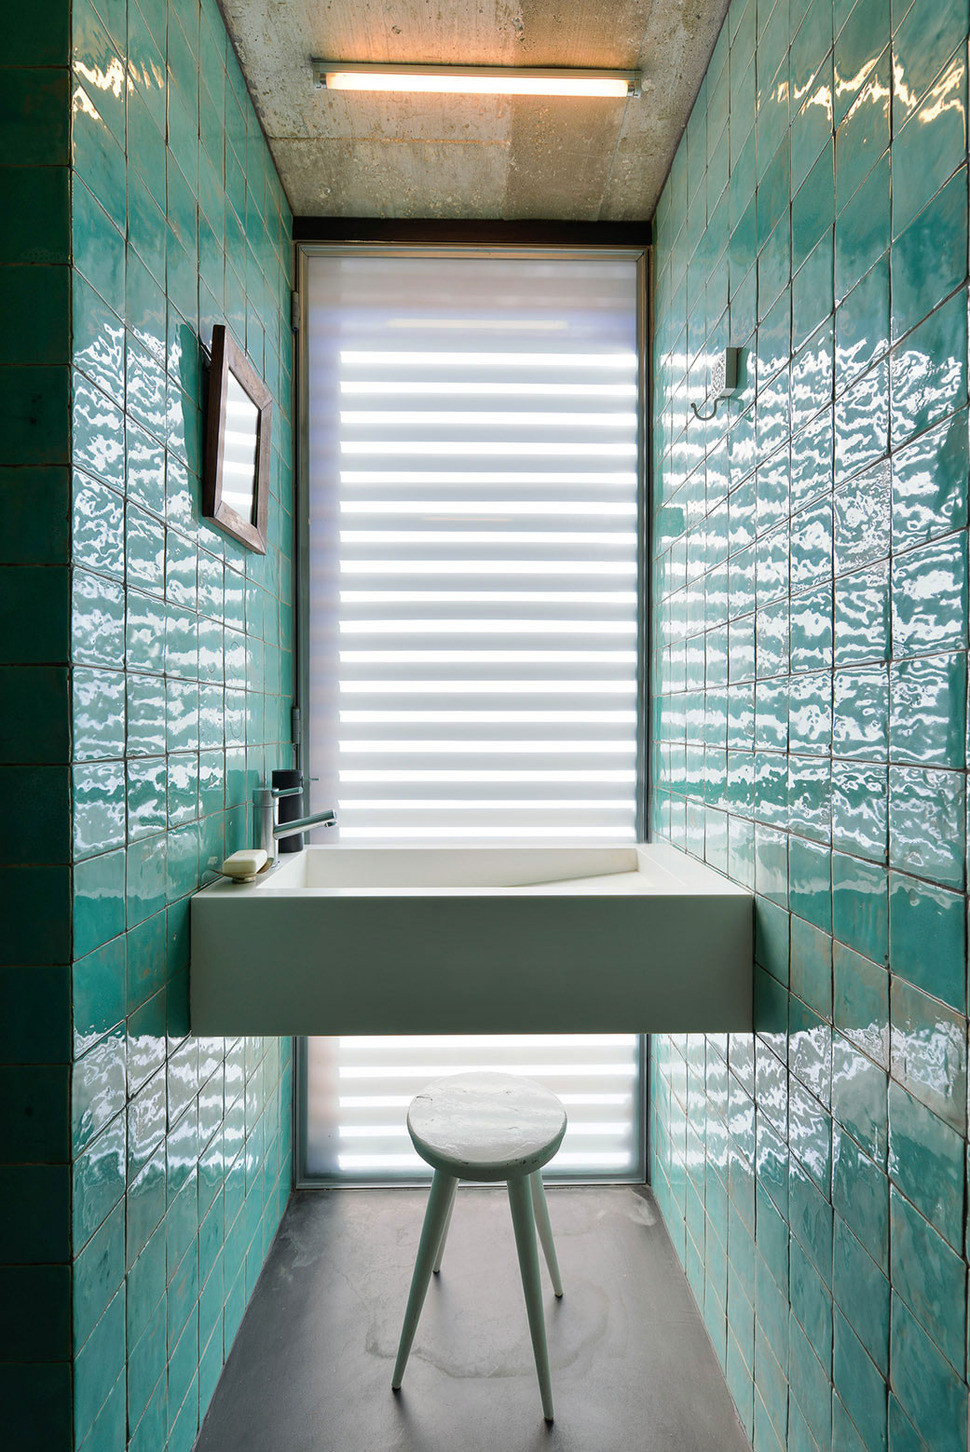 Bathroom Tile Examples
 Top 10 Tile Design Ideas for a Modern Bathroom for 2015